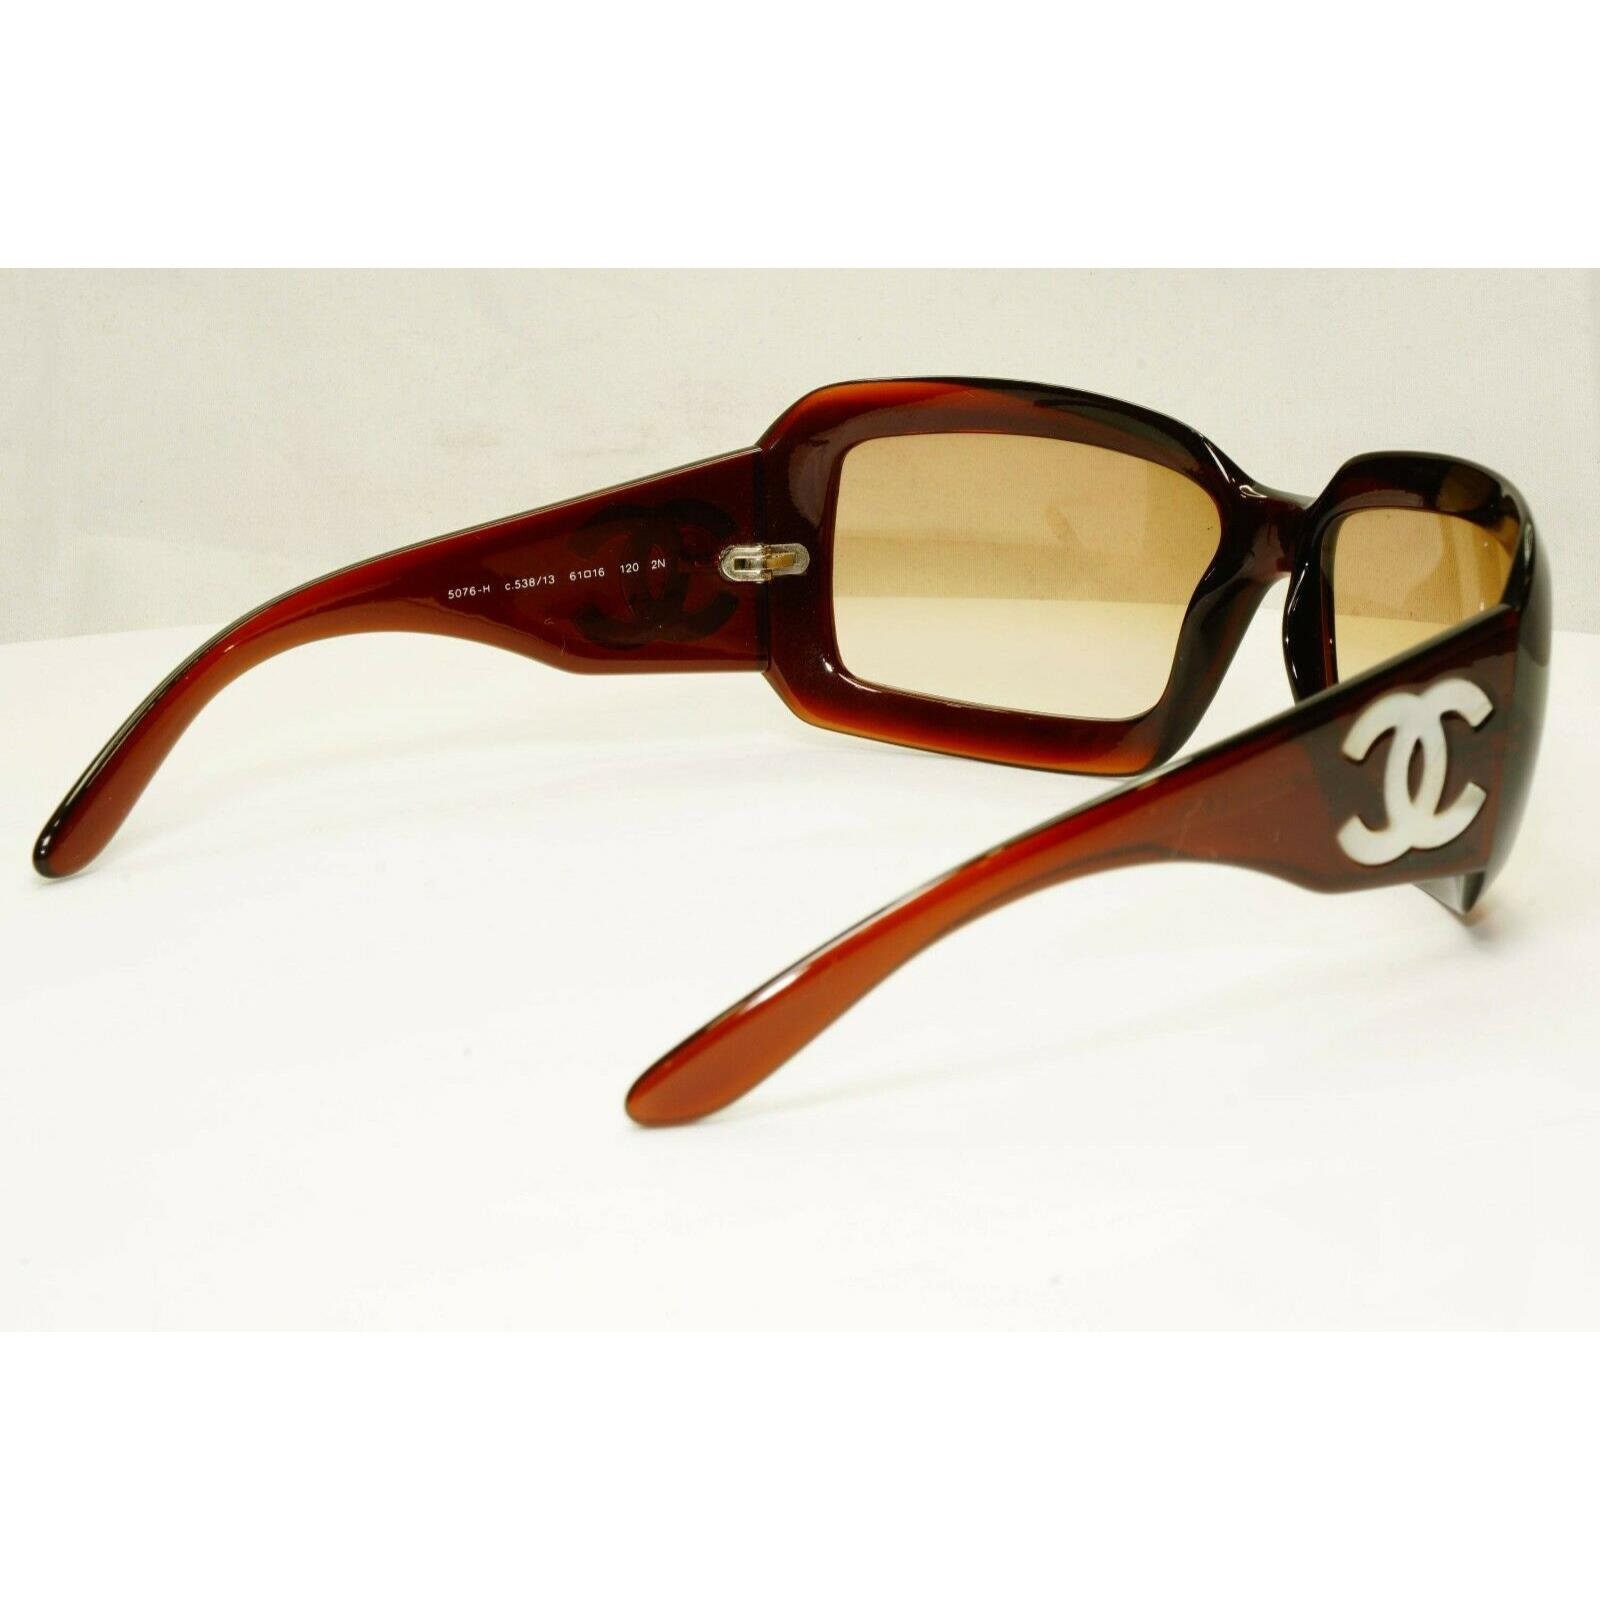 Chanel #13 sunglasses 5380-a - Gem